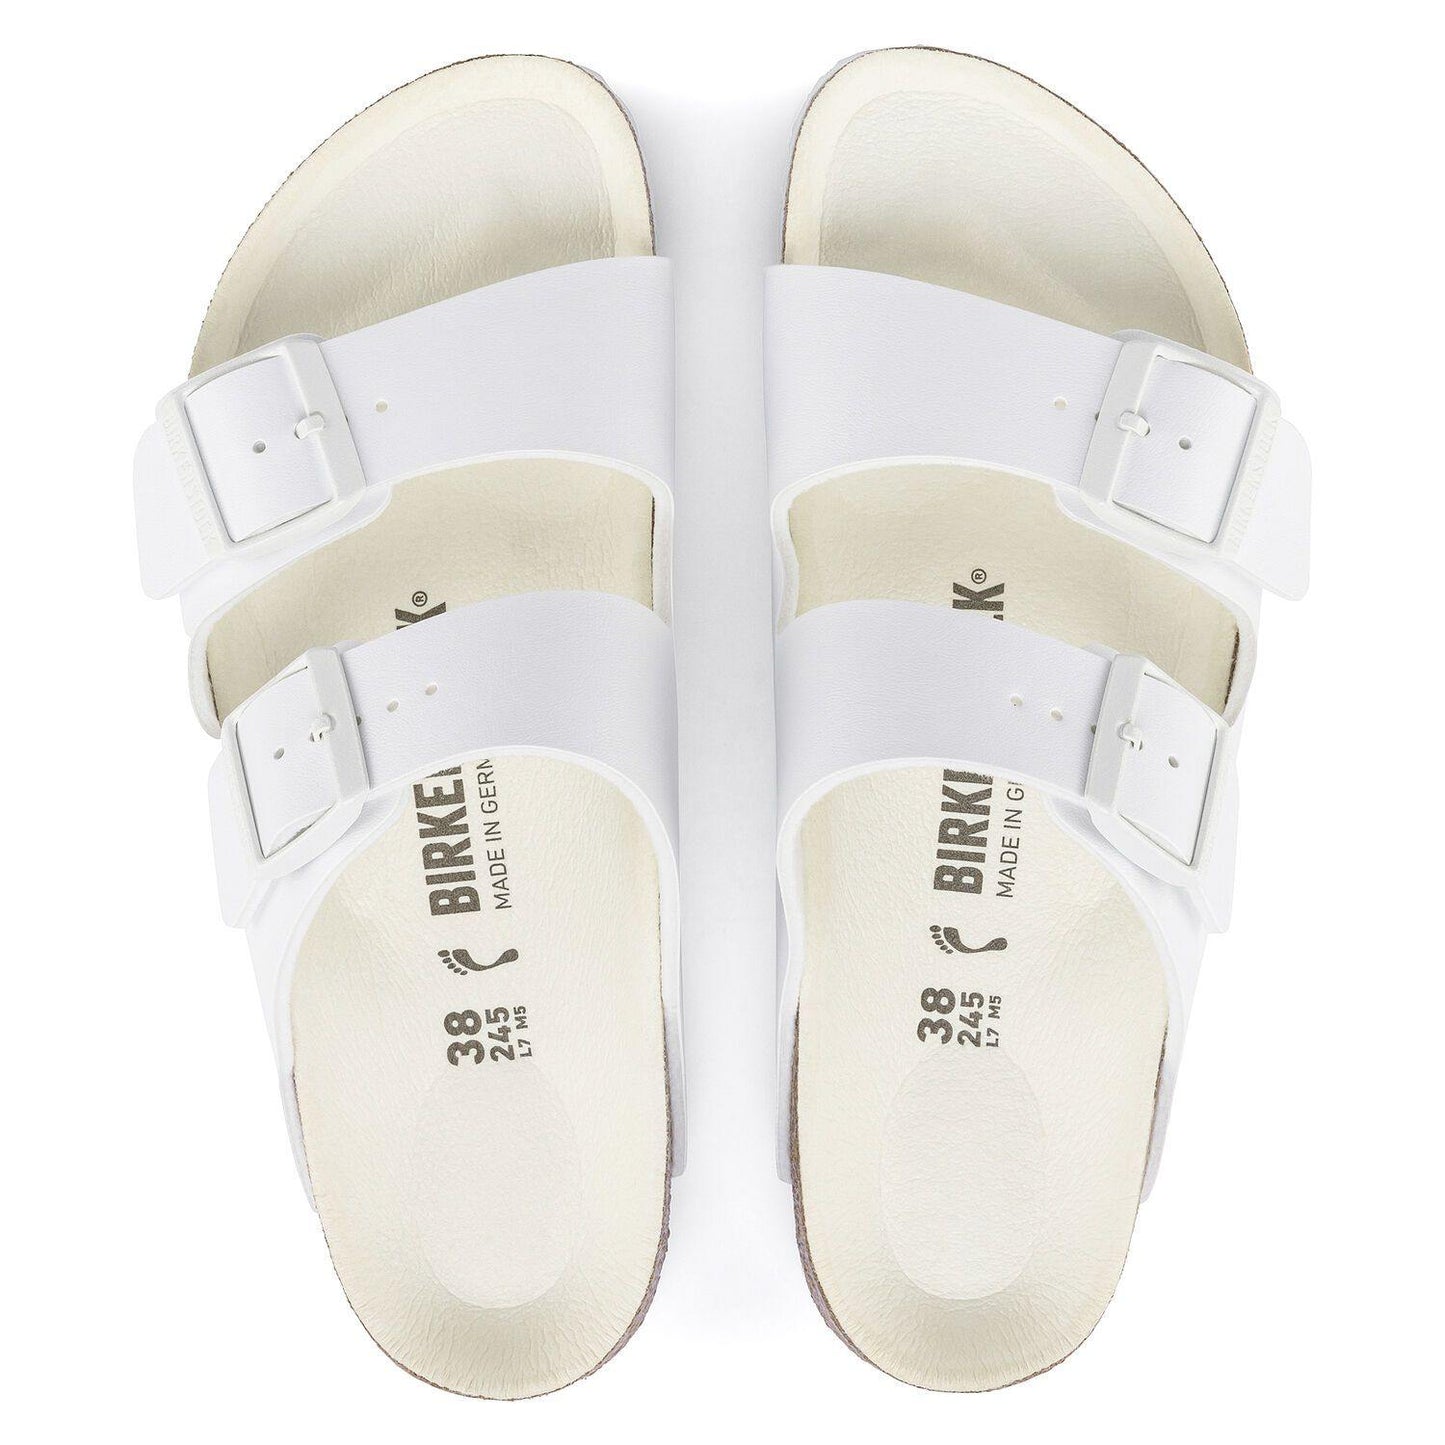 Arizona BS - Total white - Bel Ami calzature